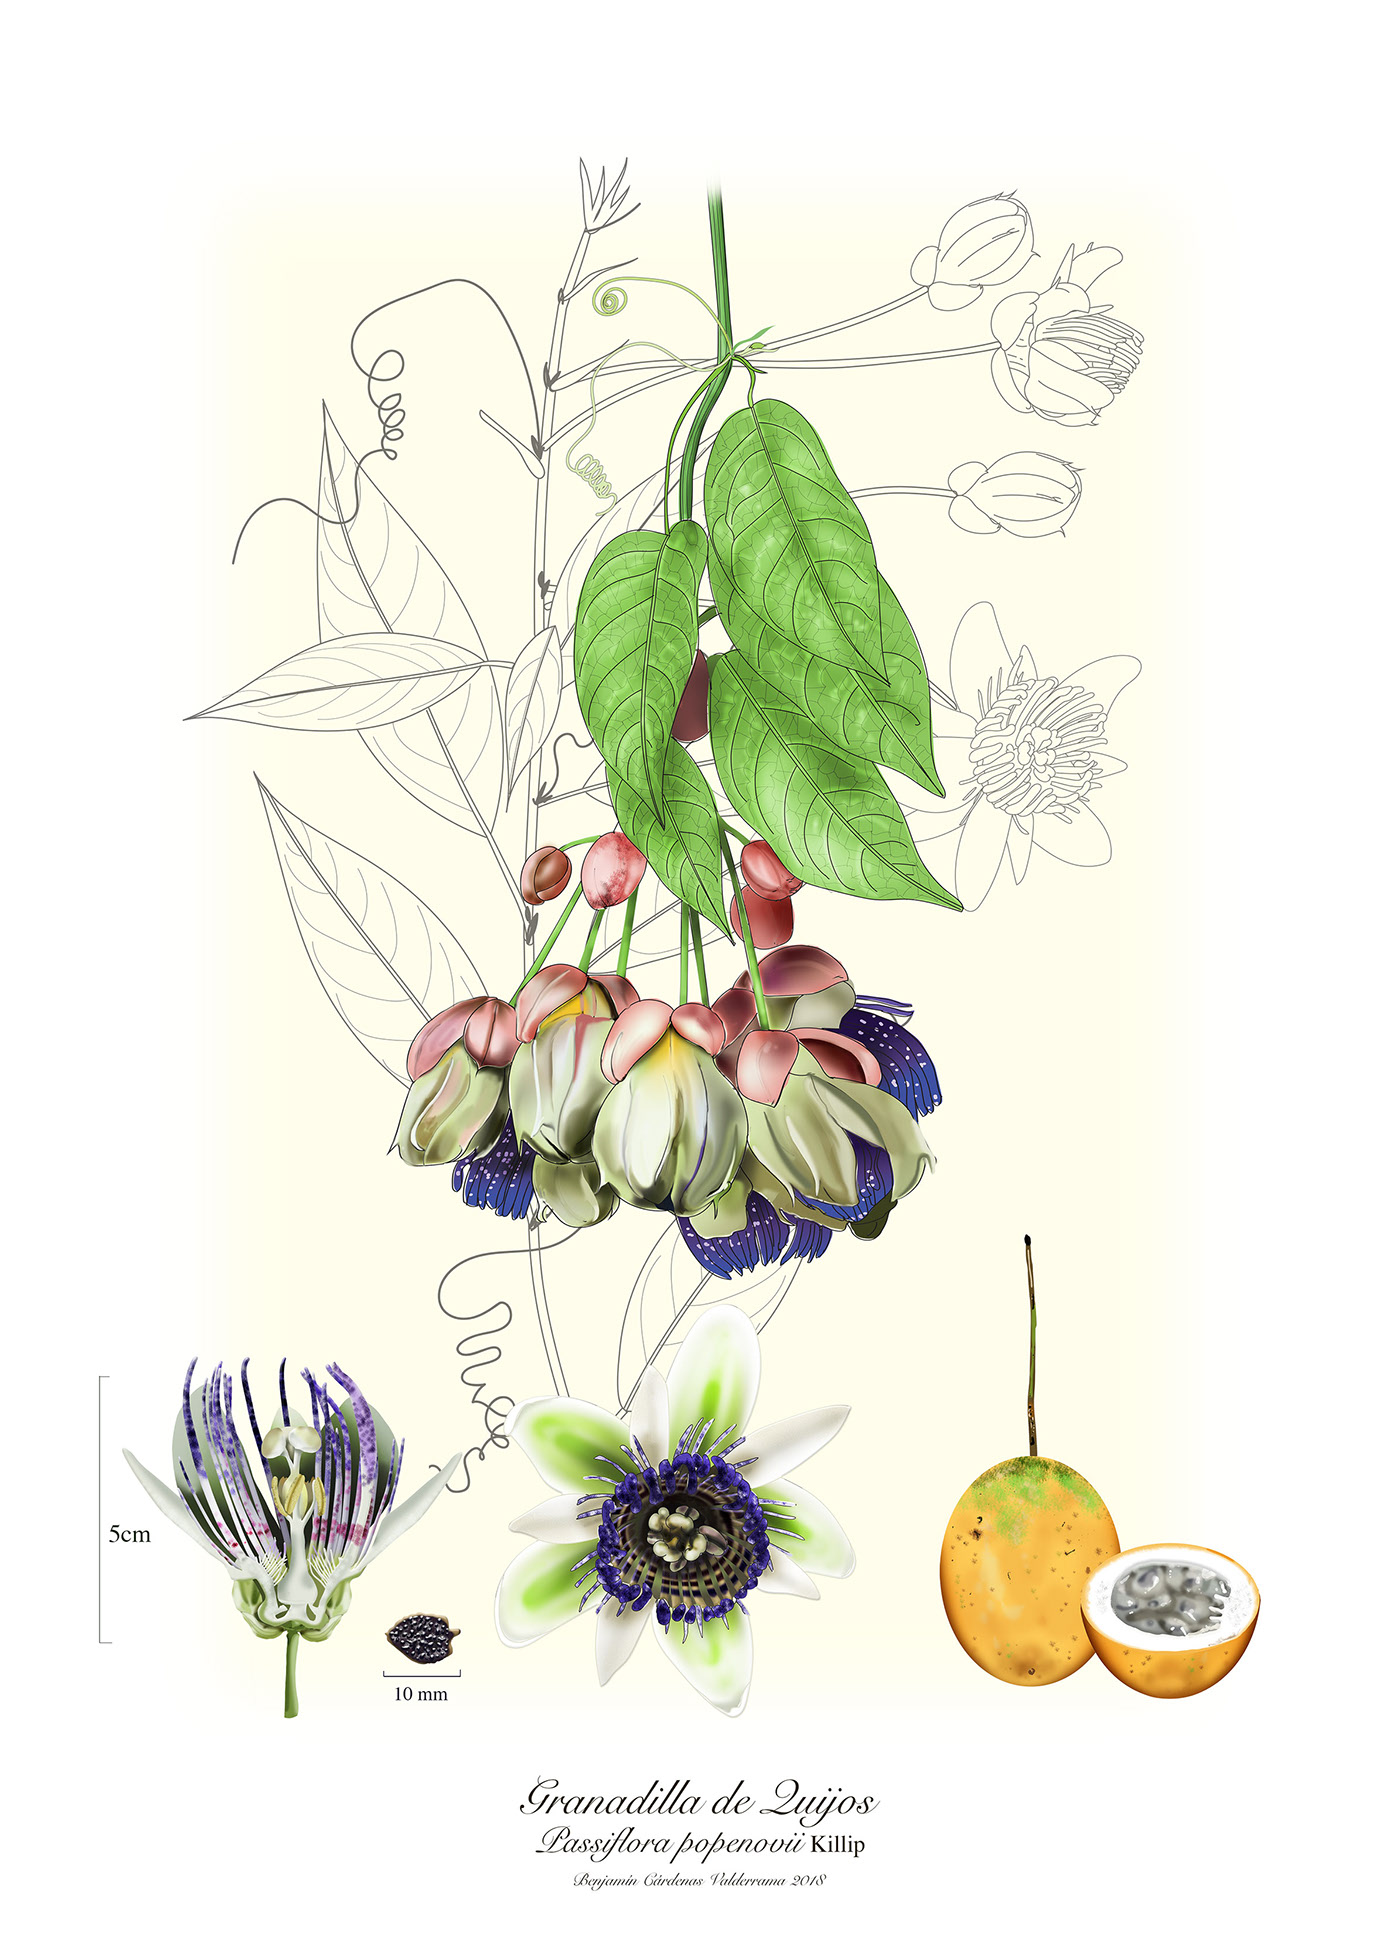 Illustration Passiflora popenovii, Par Benjamin Cardenas, via x 